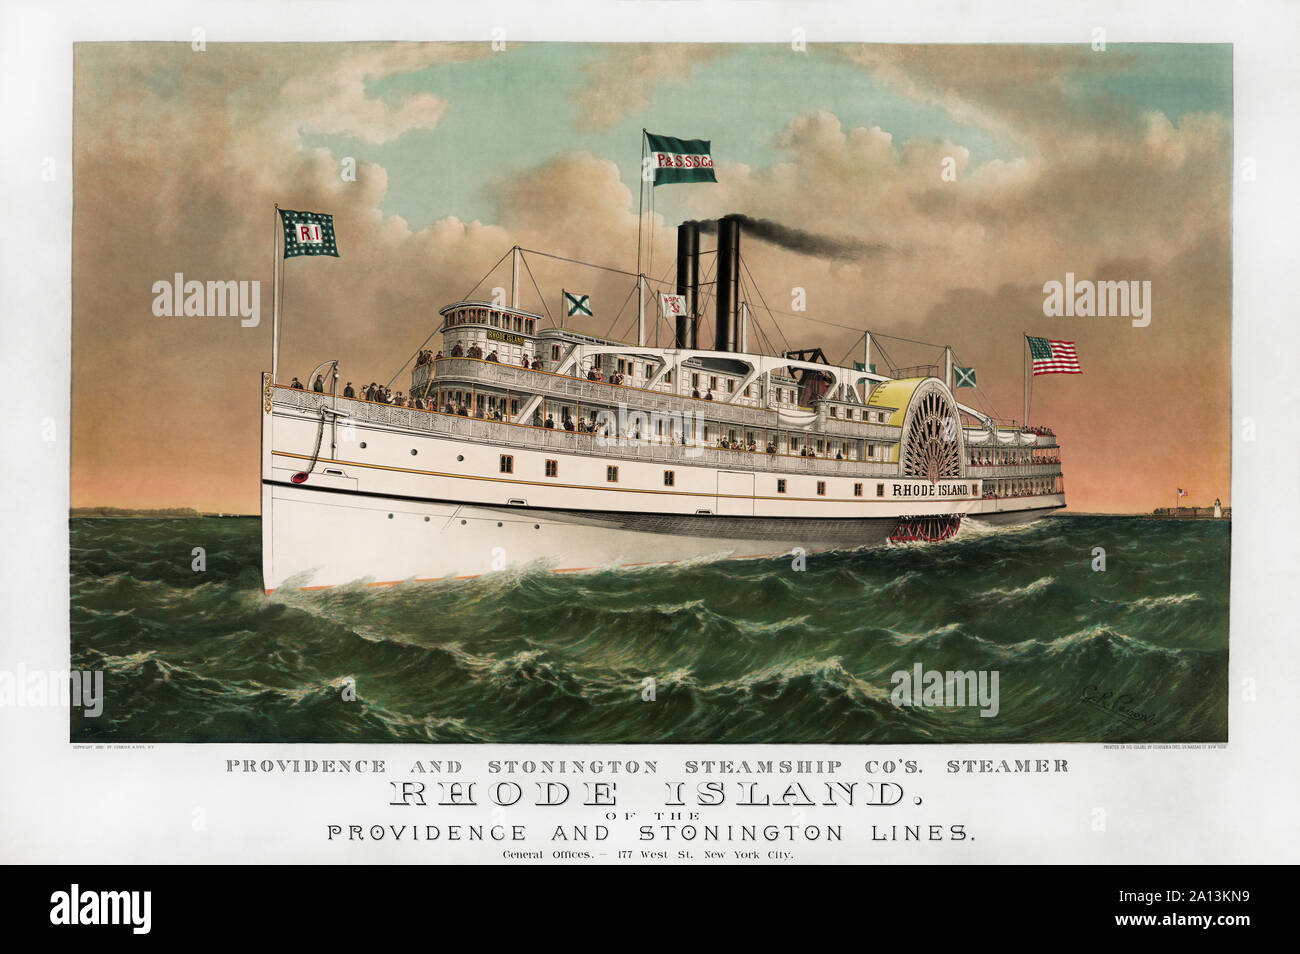 Providence and Stonington Steamship companyâ€™s Rhode Island steamer from 1882. Stock Photo